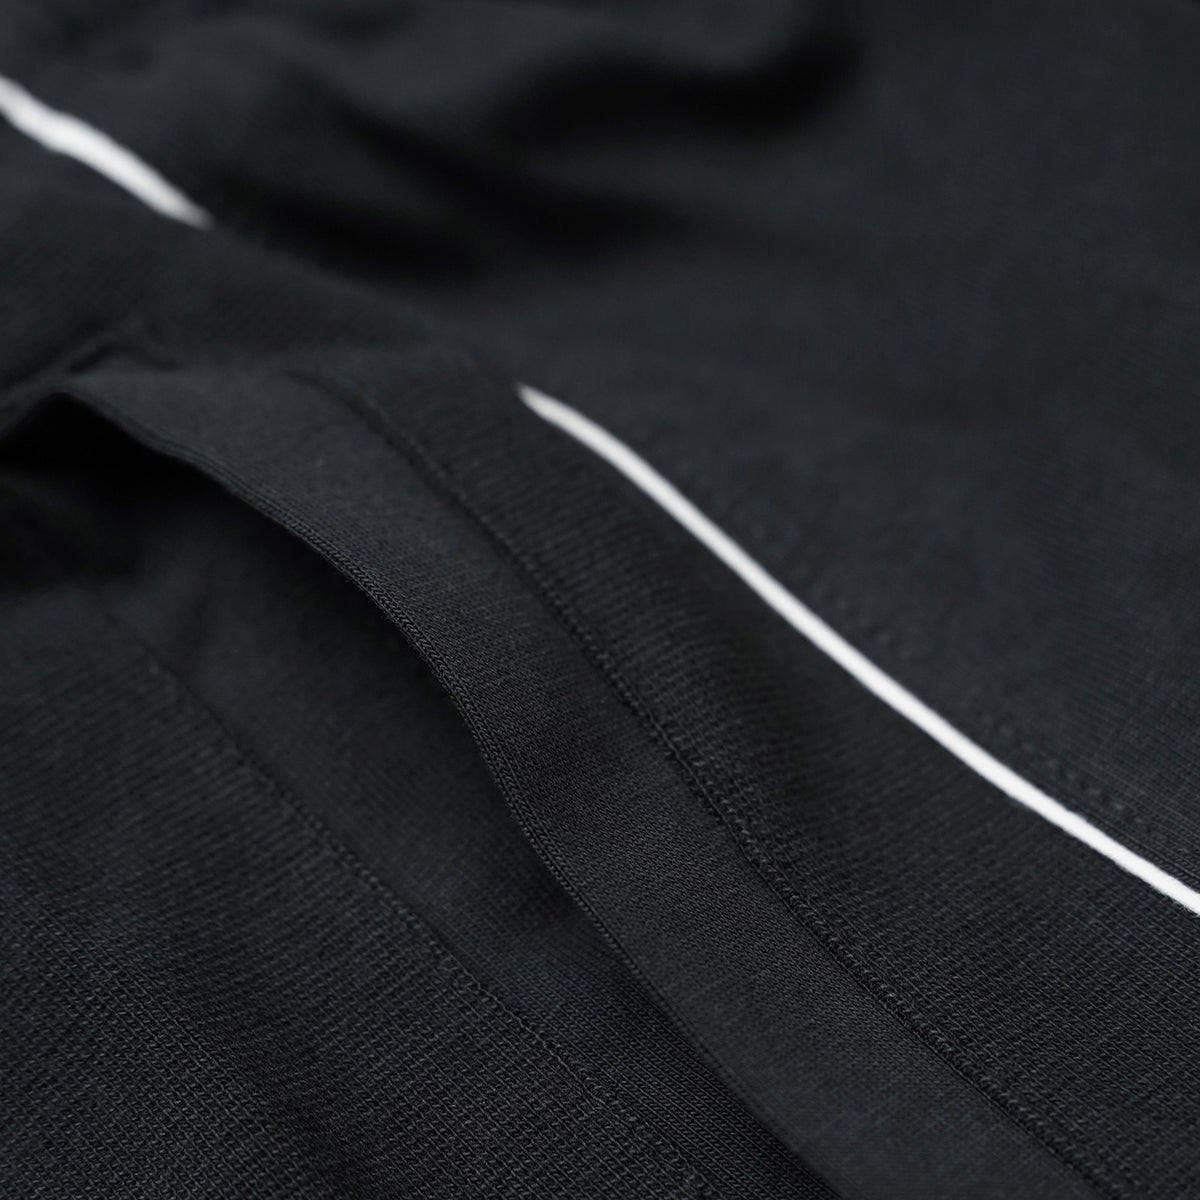 Standard Issue Fleece Shorts - Black